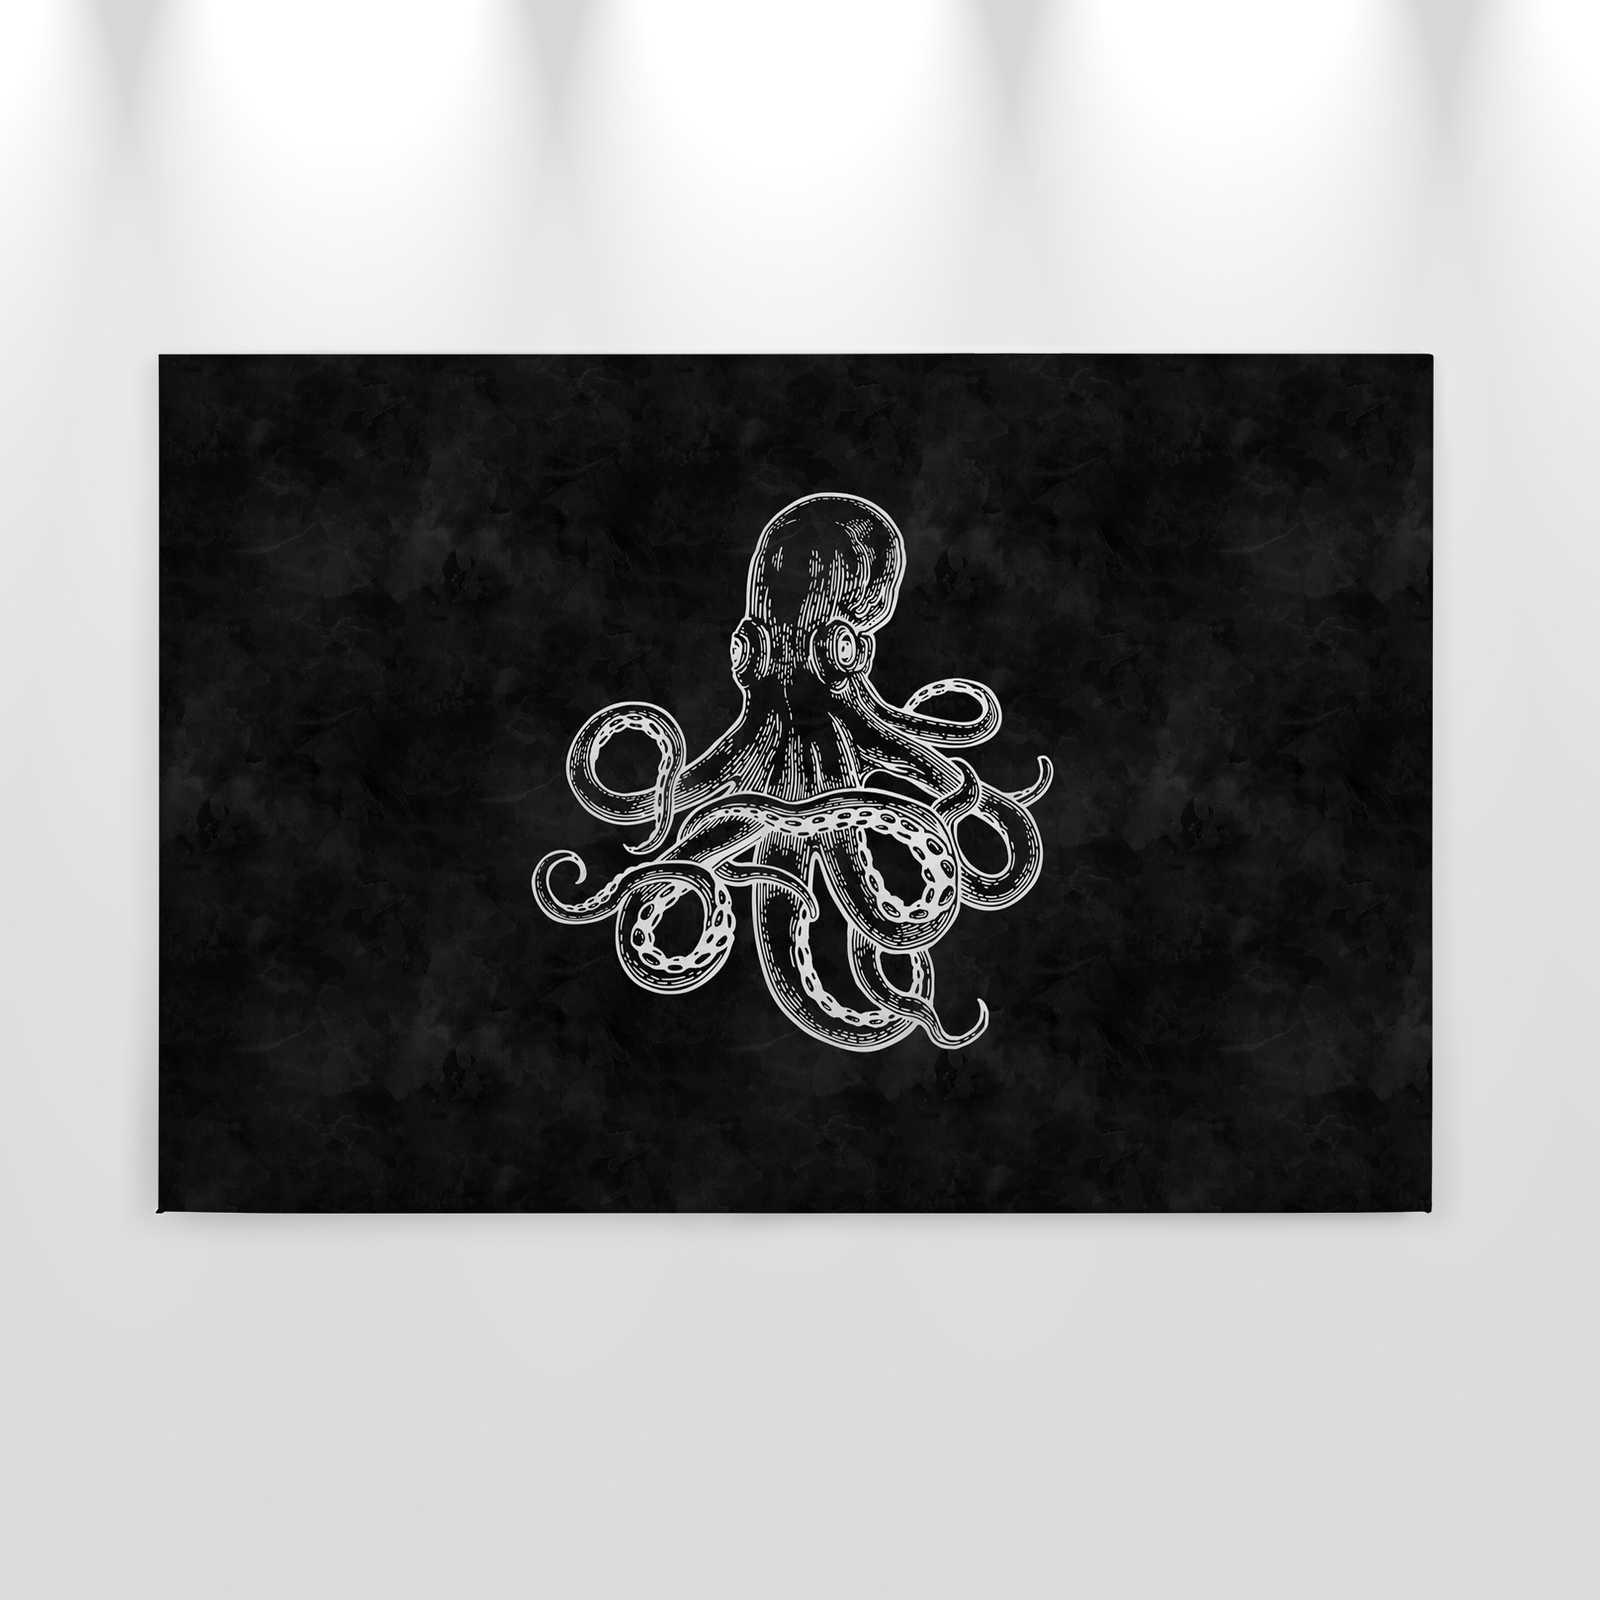             Zwart-wit Canvas Octopus & Schoolbord Look - 0,90 m x 0,60 m
        